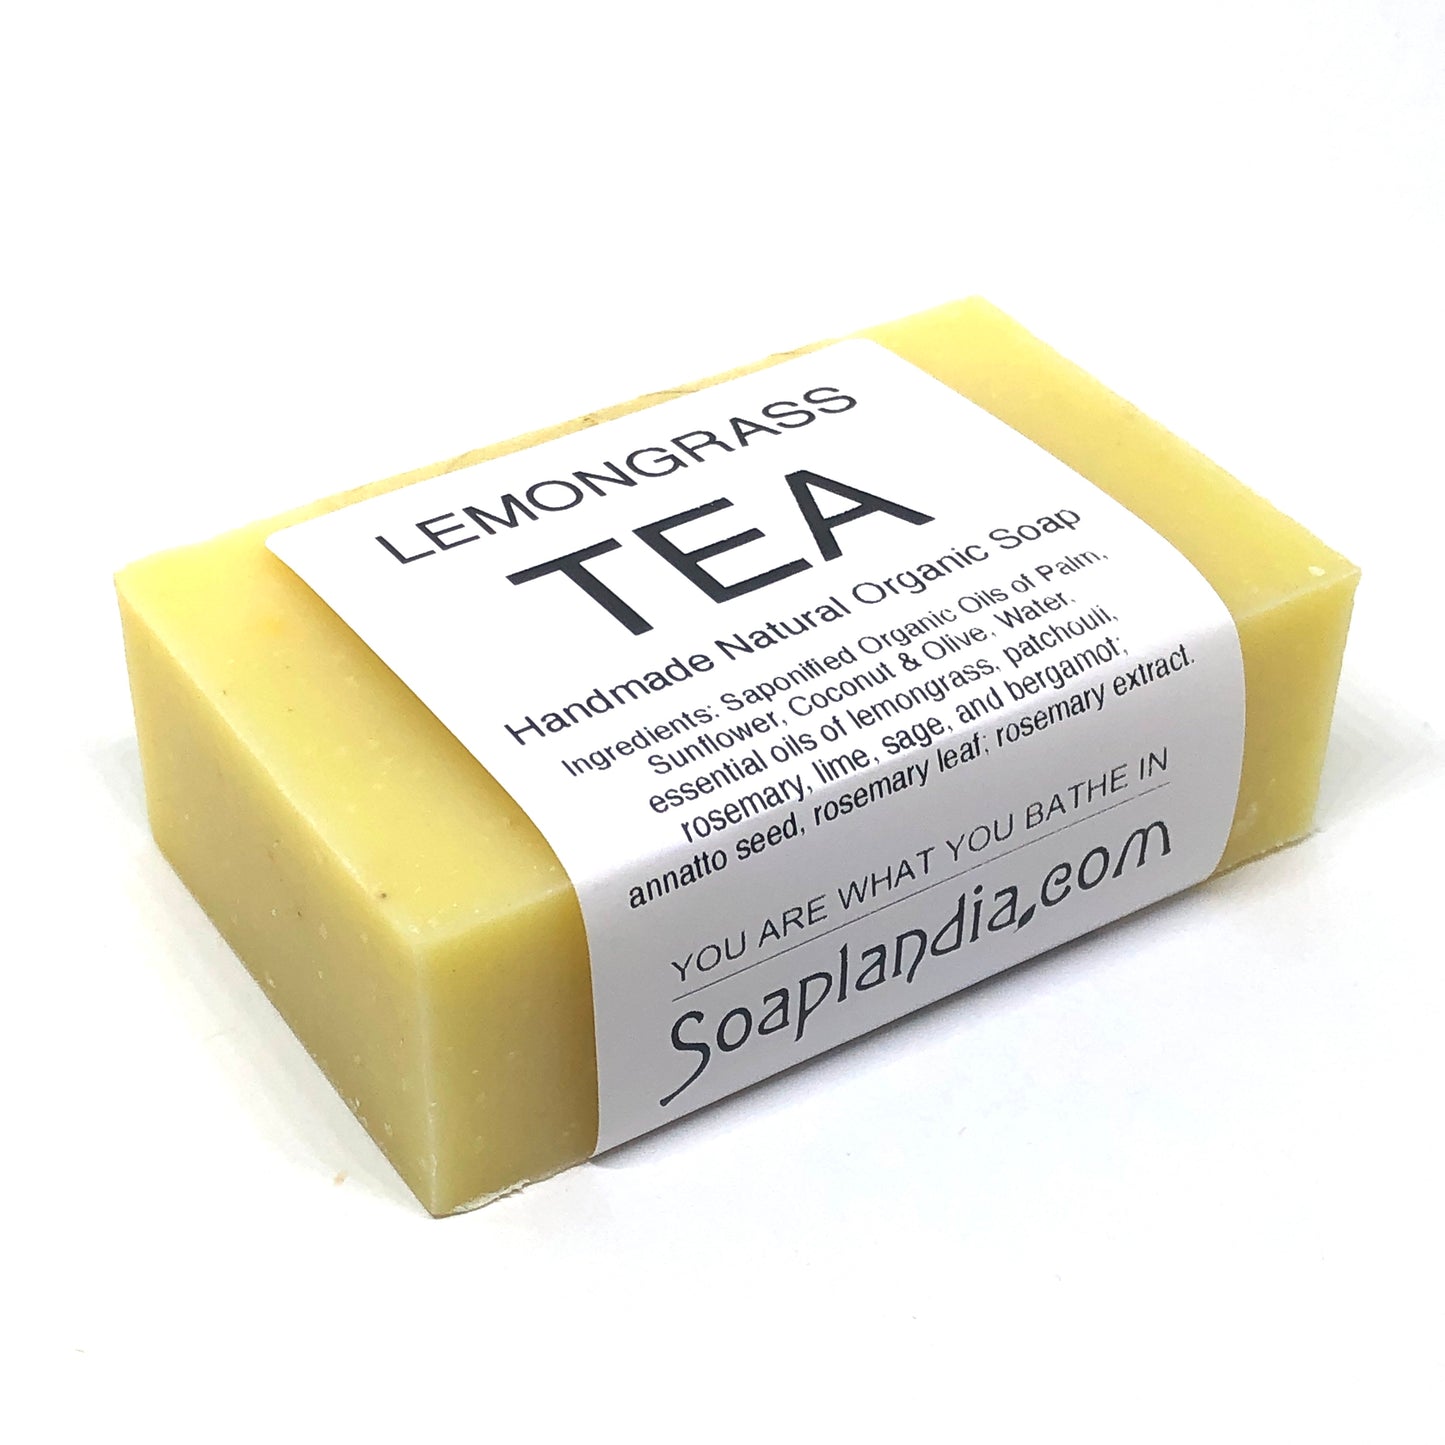 Lemongrass Tea Bar Soap, Organic